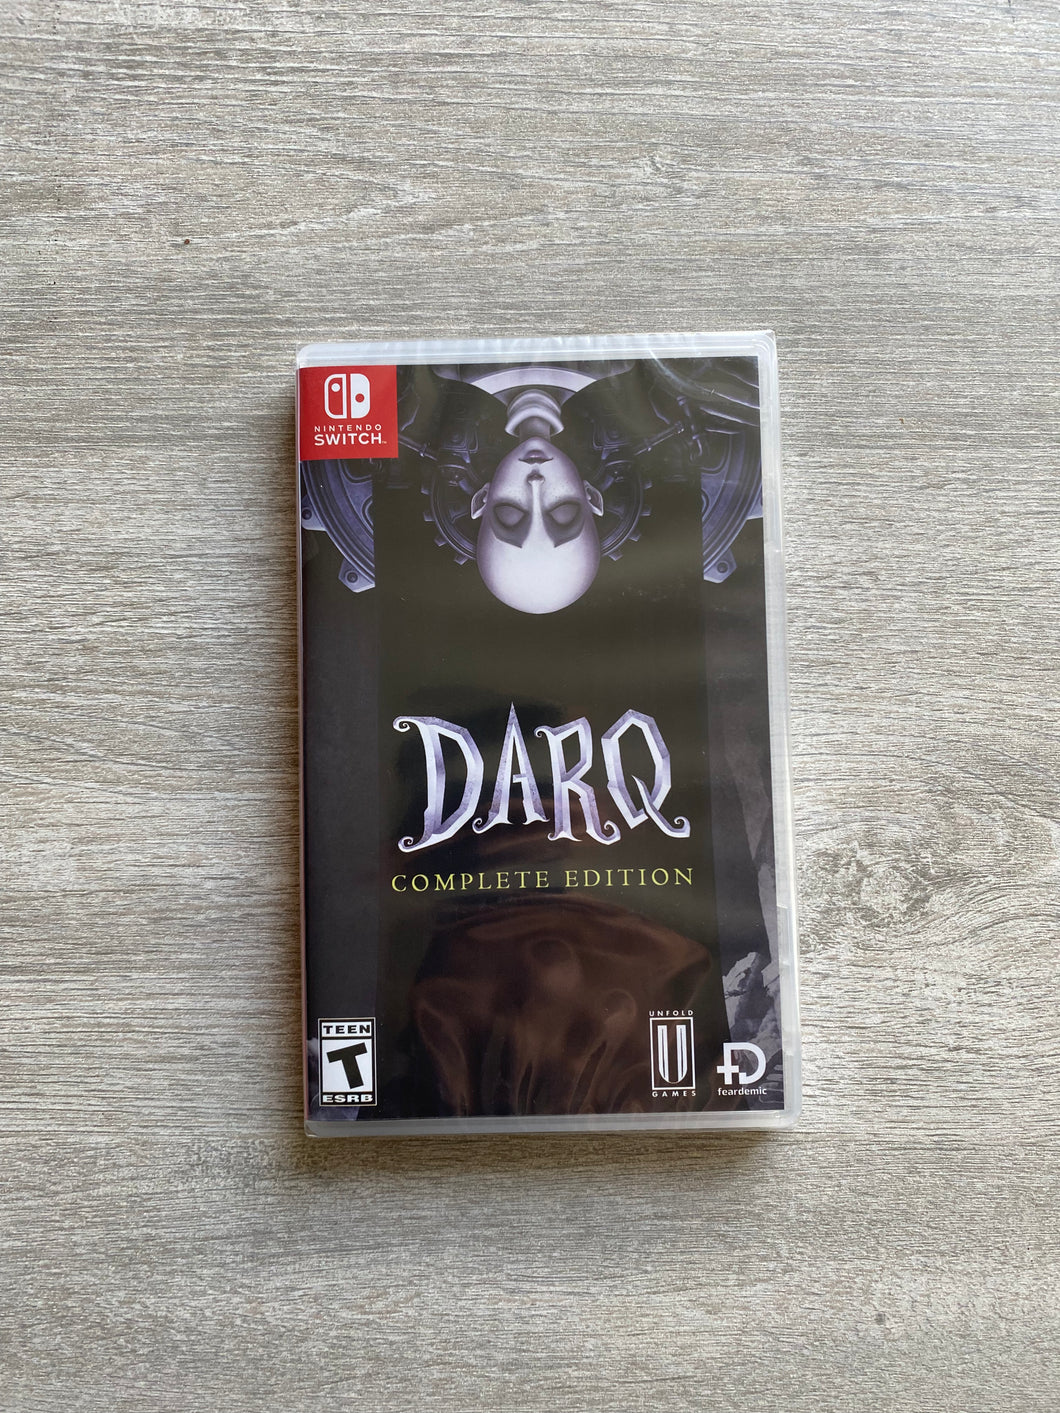 Darq / Limited run games / Switch